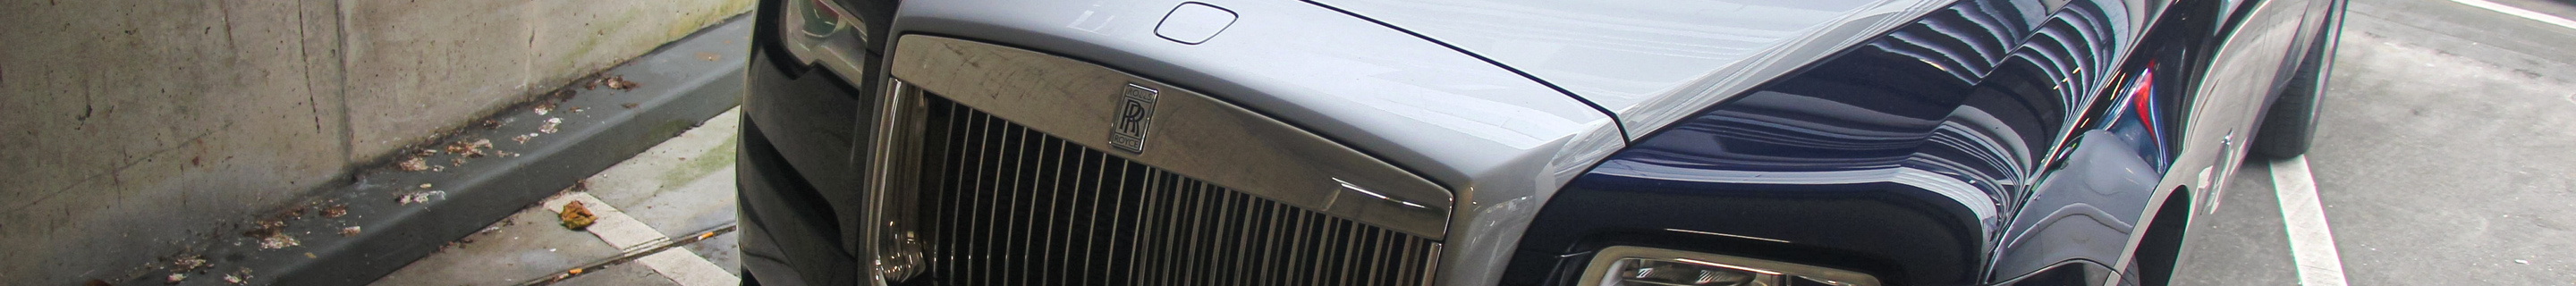 Rolls-Royce Wraith Series II